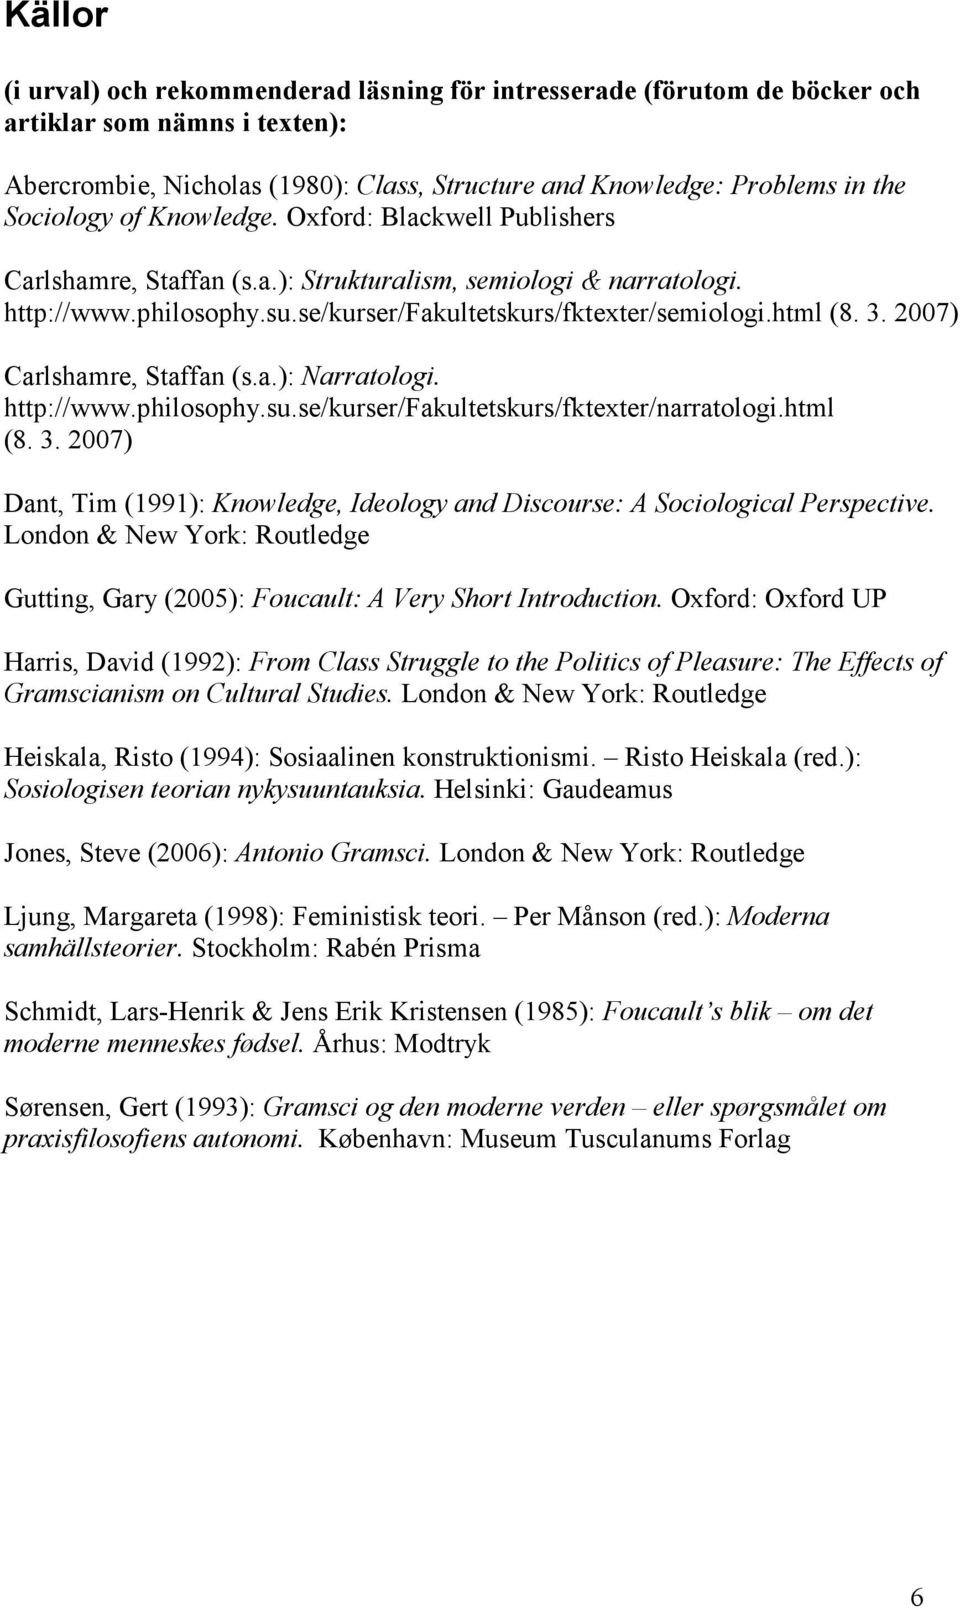 2007) Carlshamre, Staffan (s.a.): Narratologi. http://www.philosophy.su.se/kurser/fakultetskurs/fktexter/narratologi.html (8. 3.